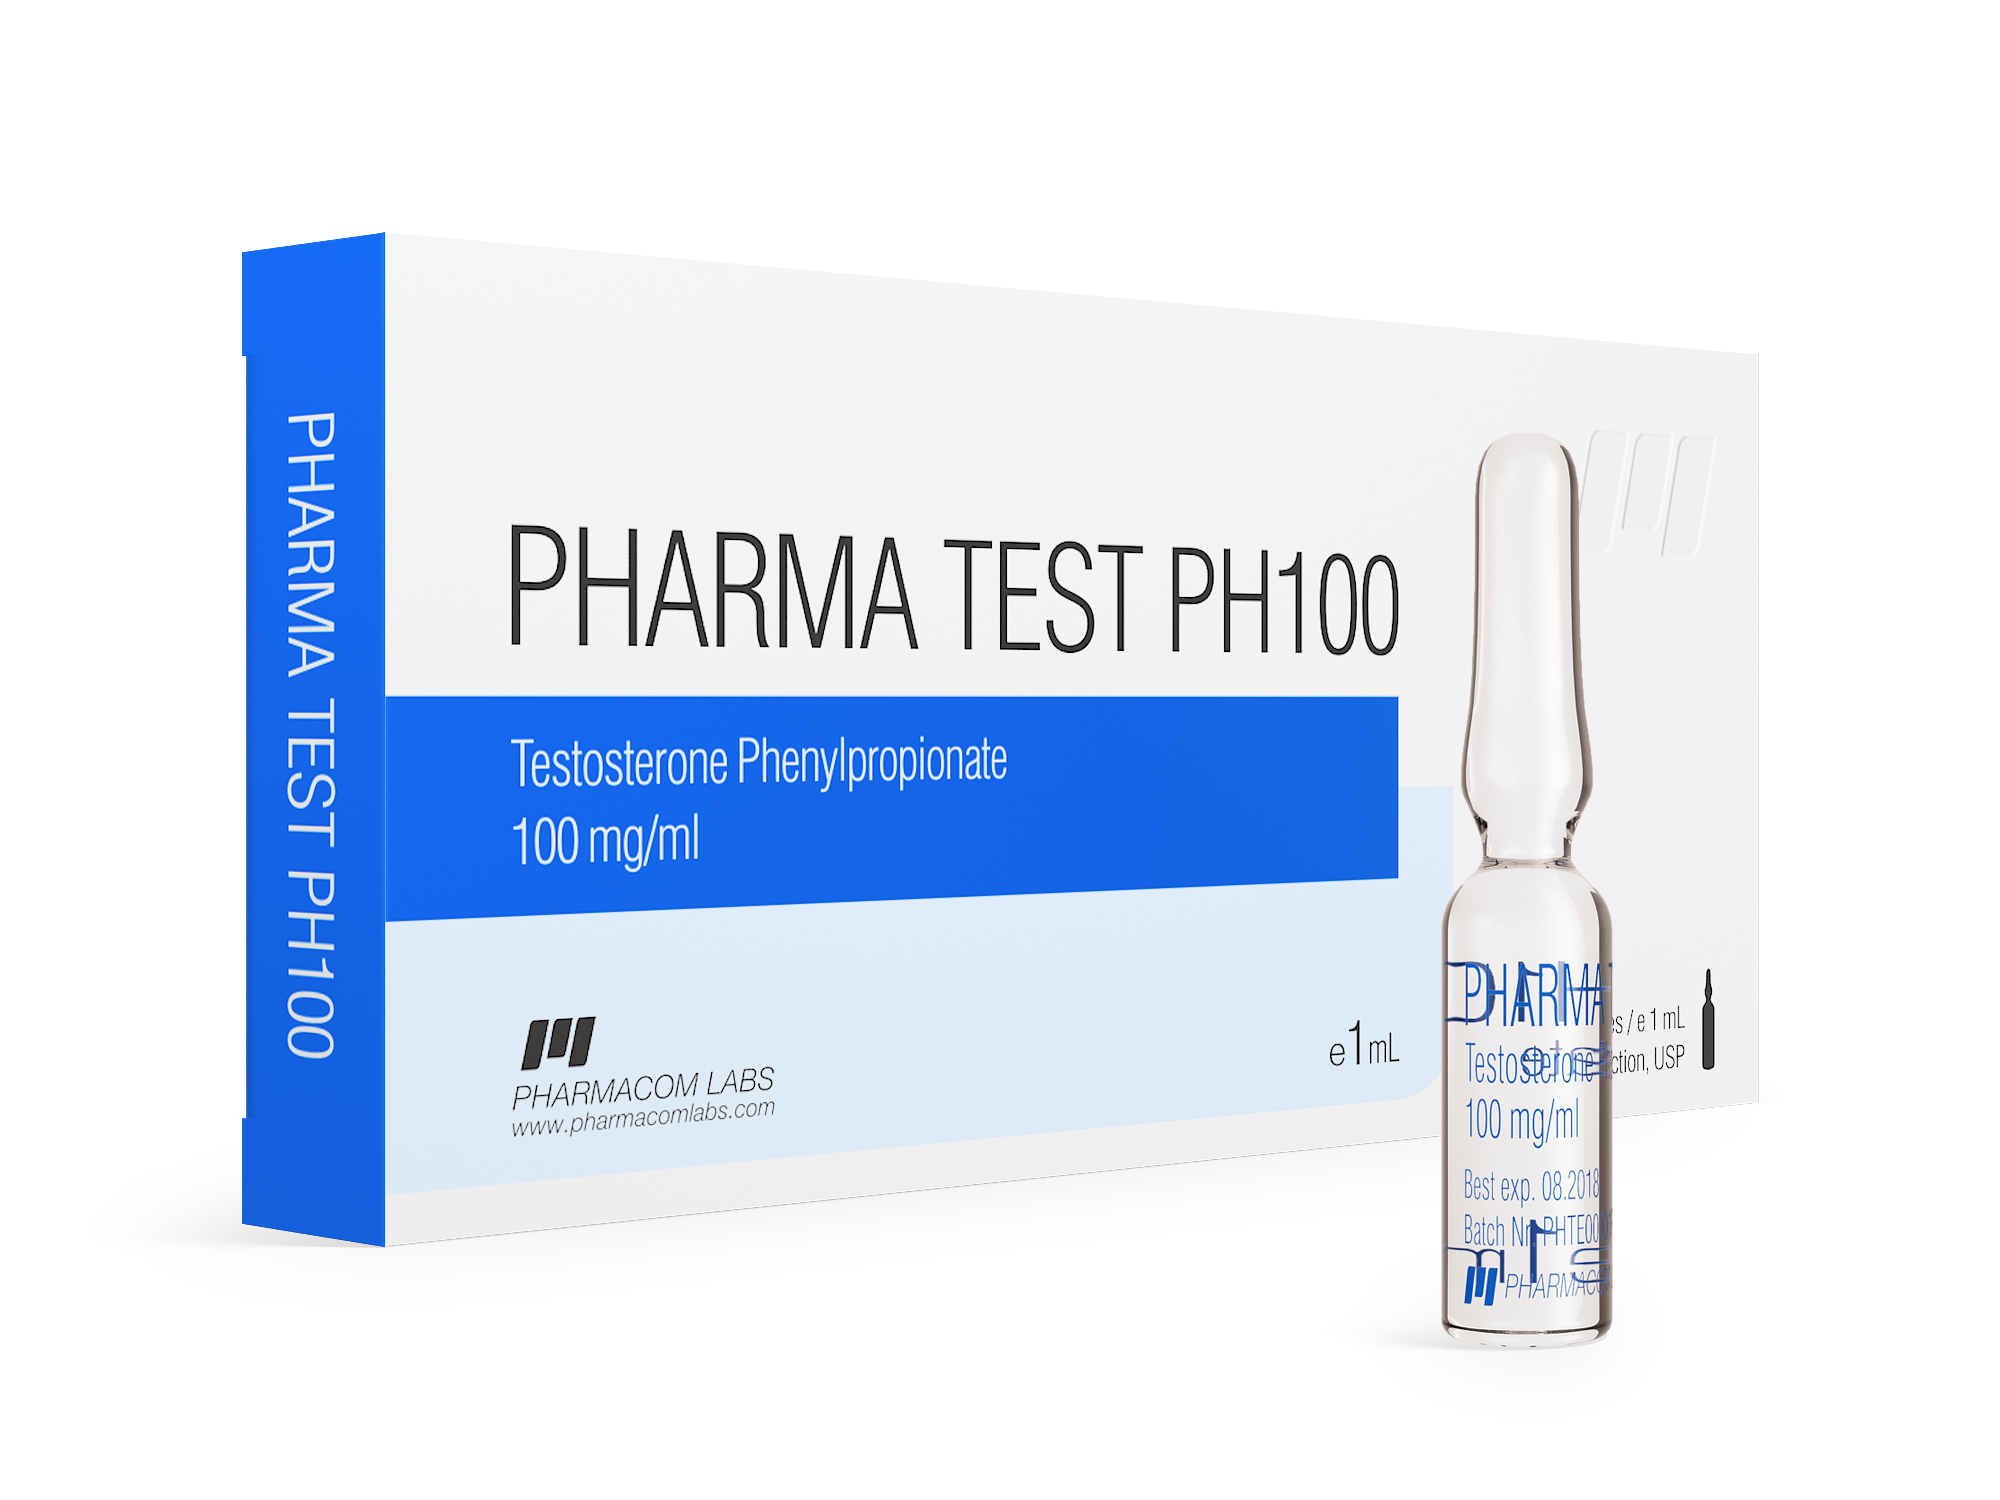 PHARMA TEST PH 100 (Testosterone Phenylpropionate) 100 mg/ml 10 x 1ml amps Pharmacom Labs